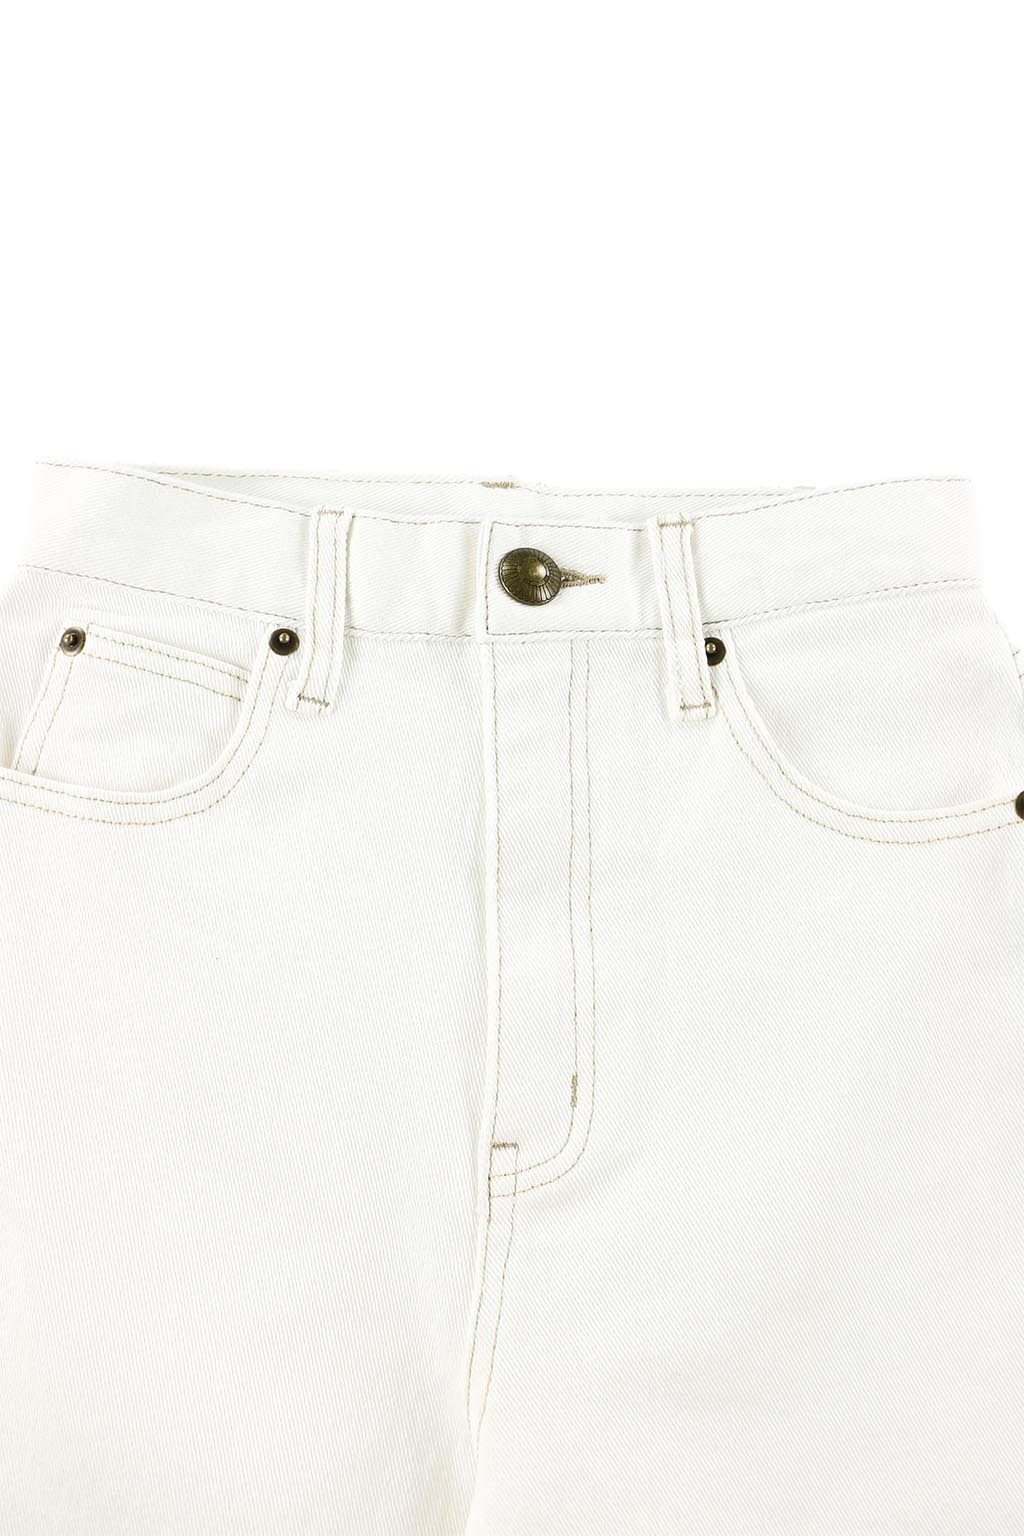 bootscut-pants-white-12